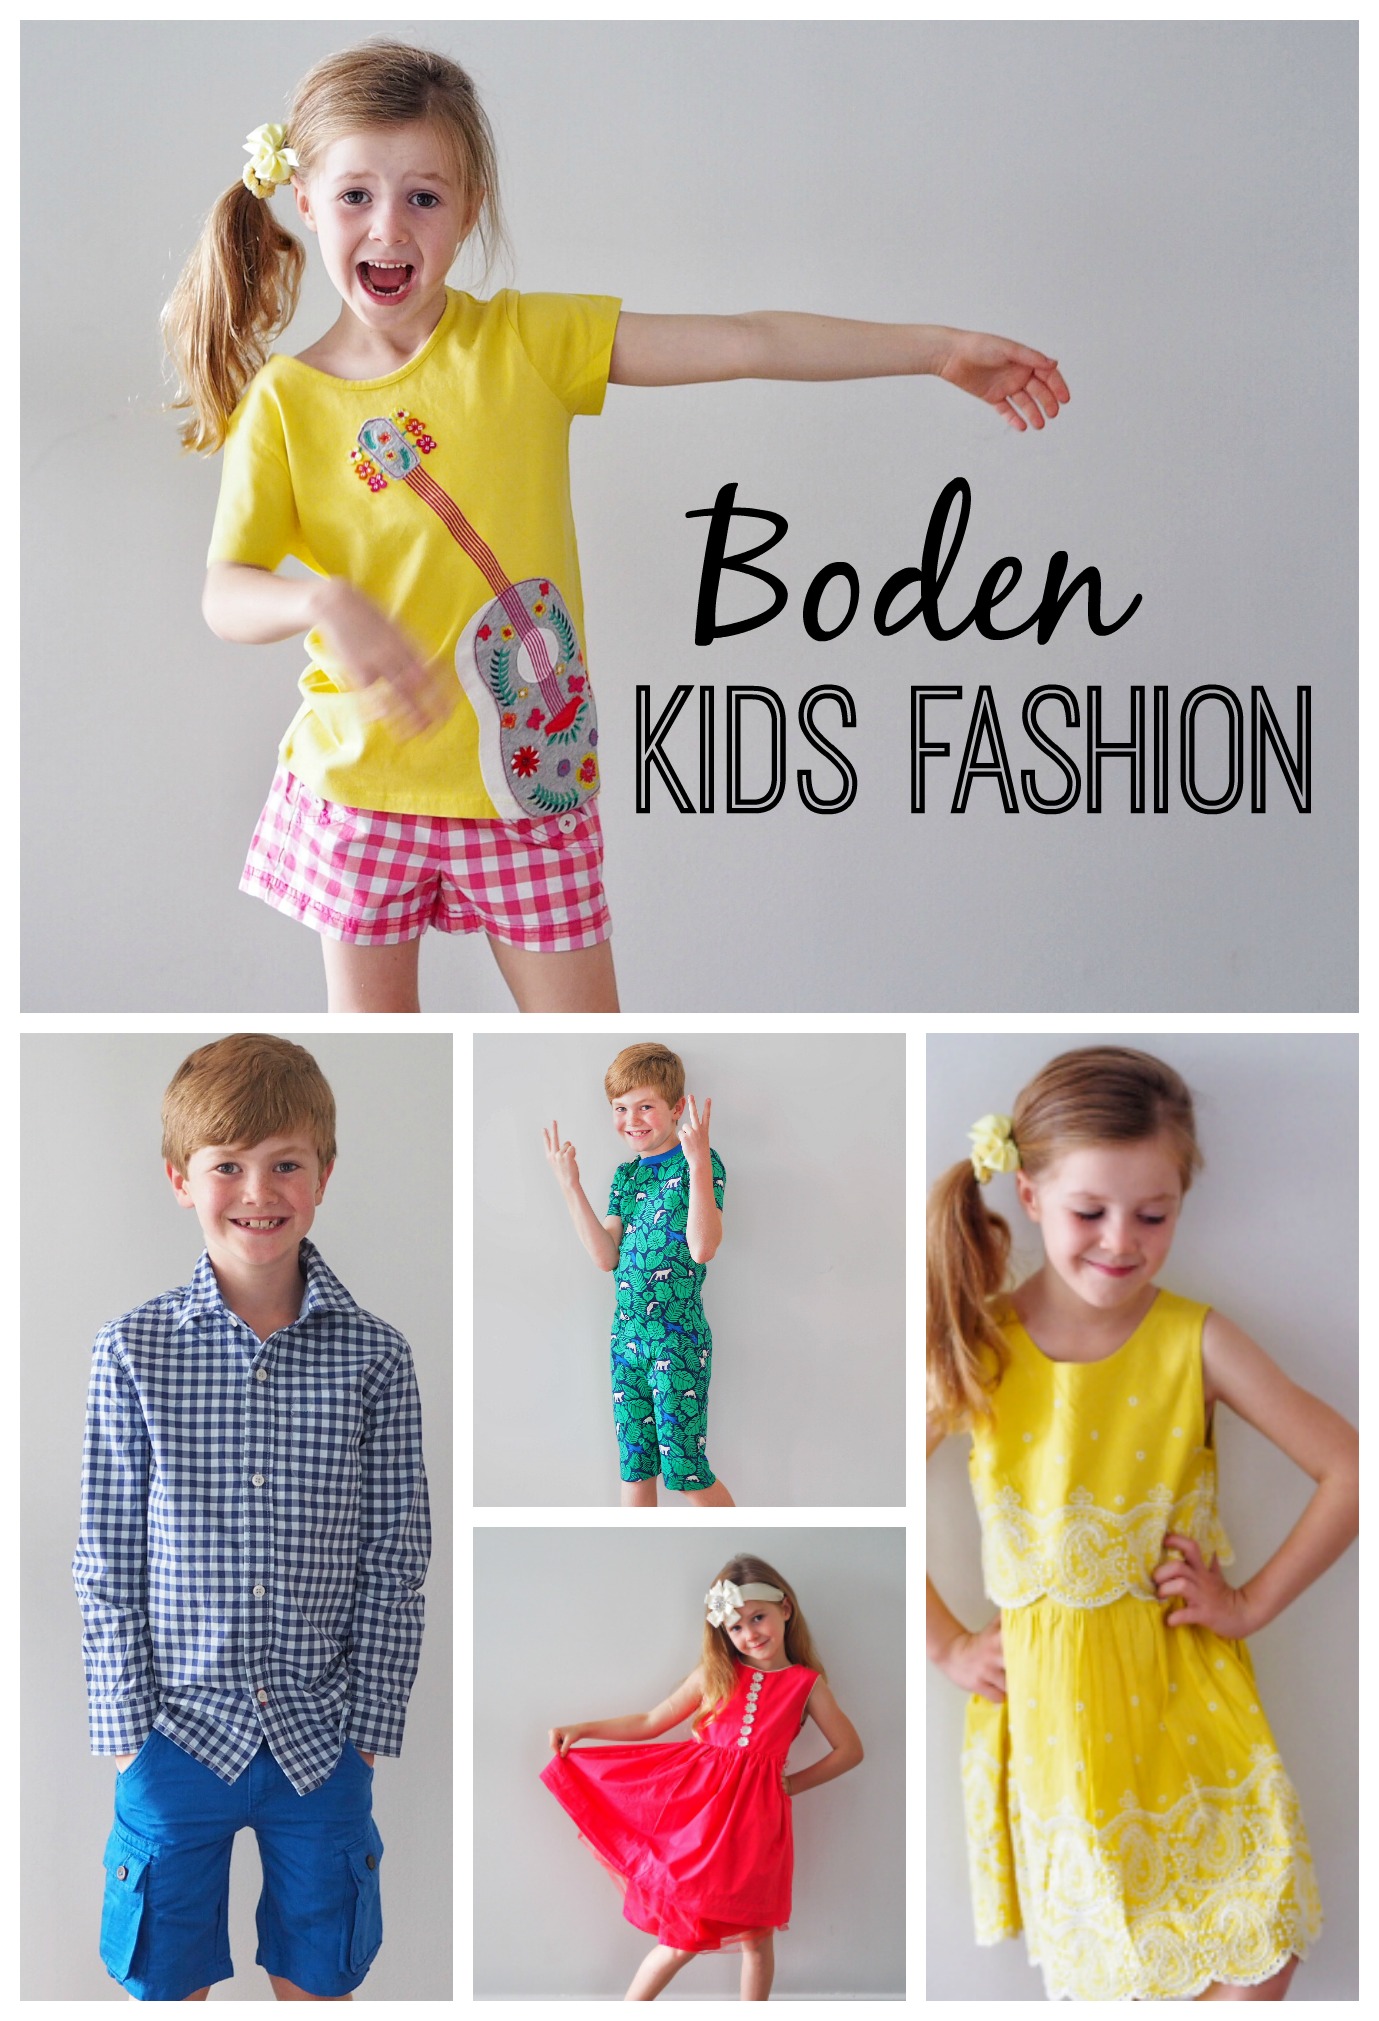 Kids Fashion with Mini Boden - Paging Fun Mums